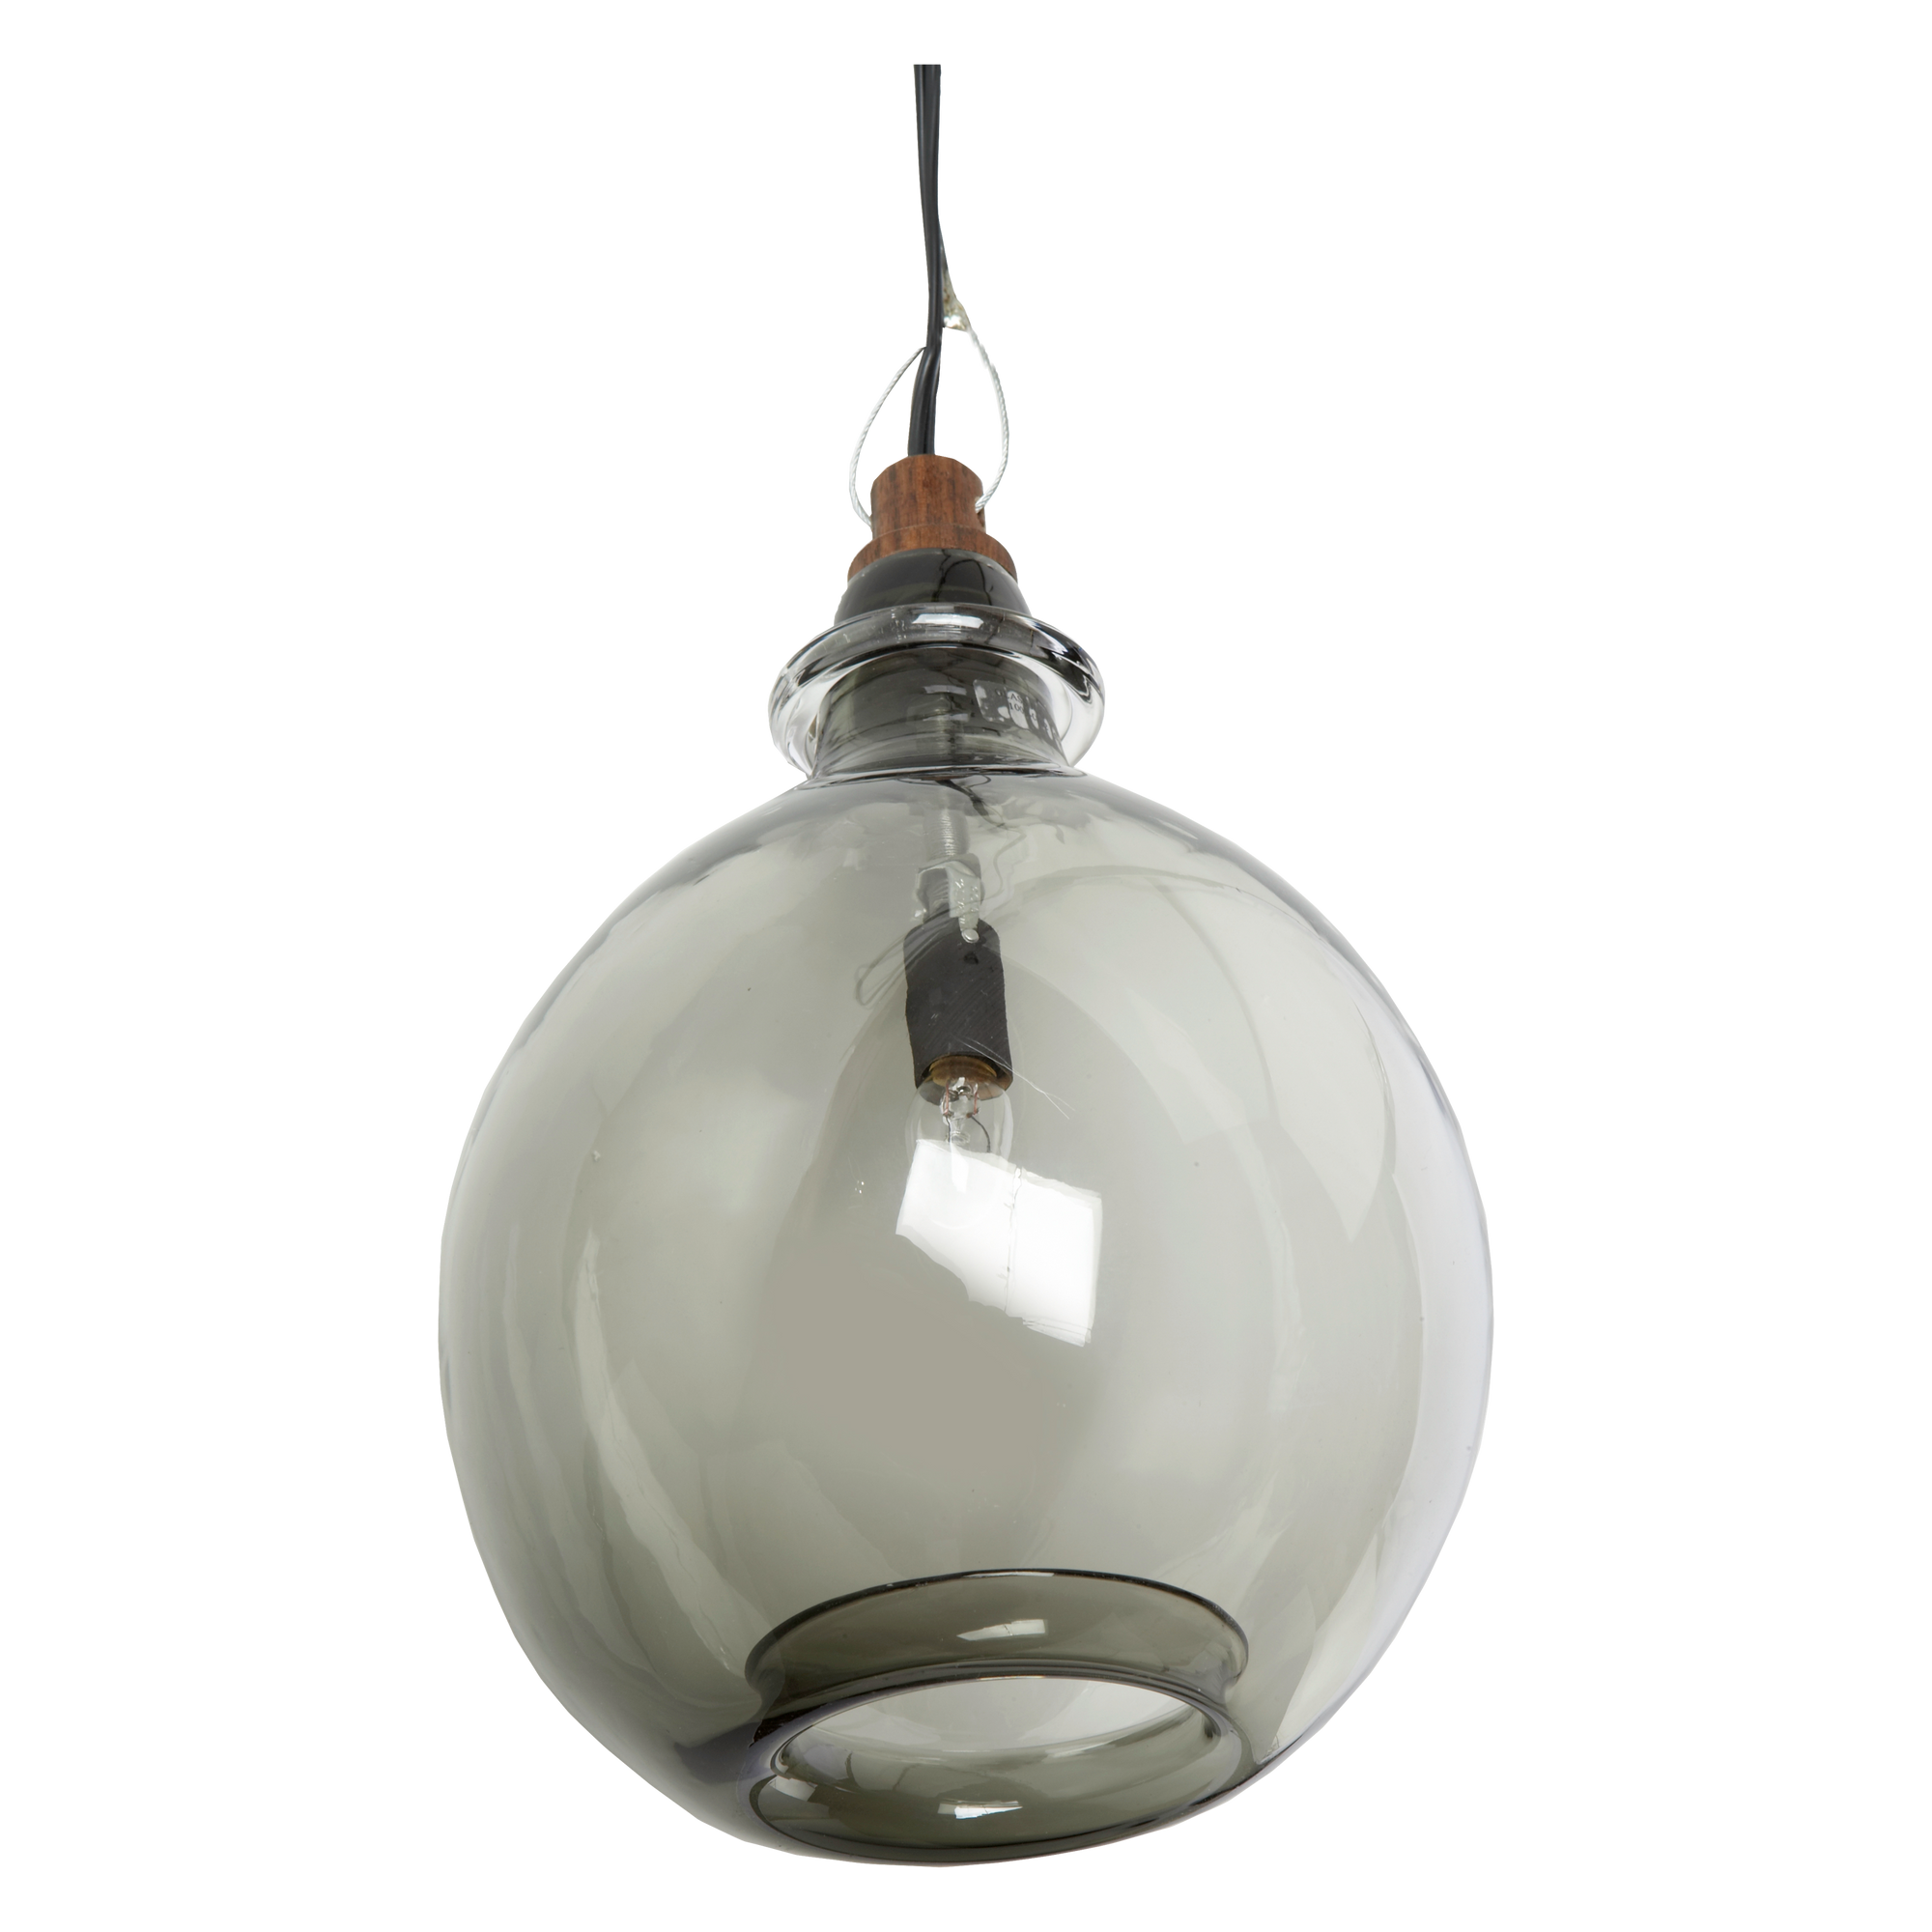 A minimalist pendant made of hand-blown smoked glass.